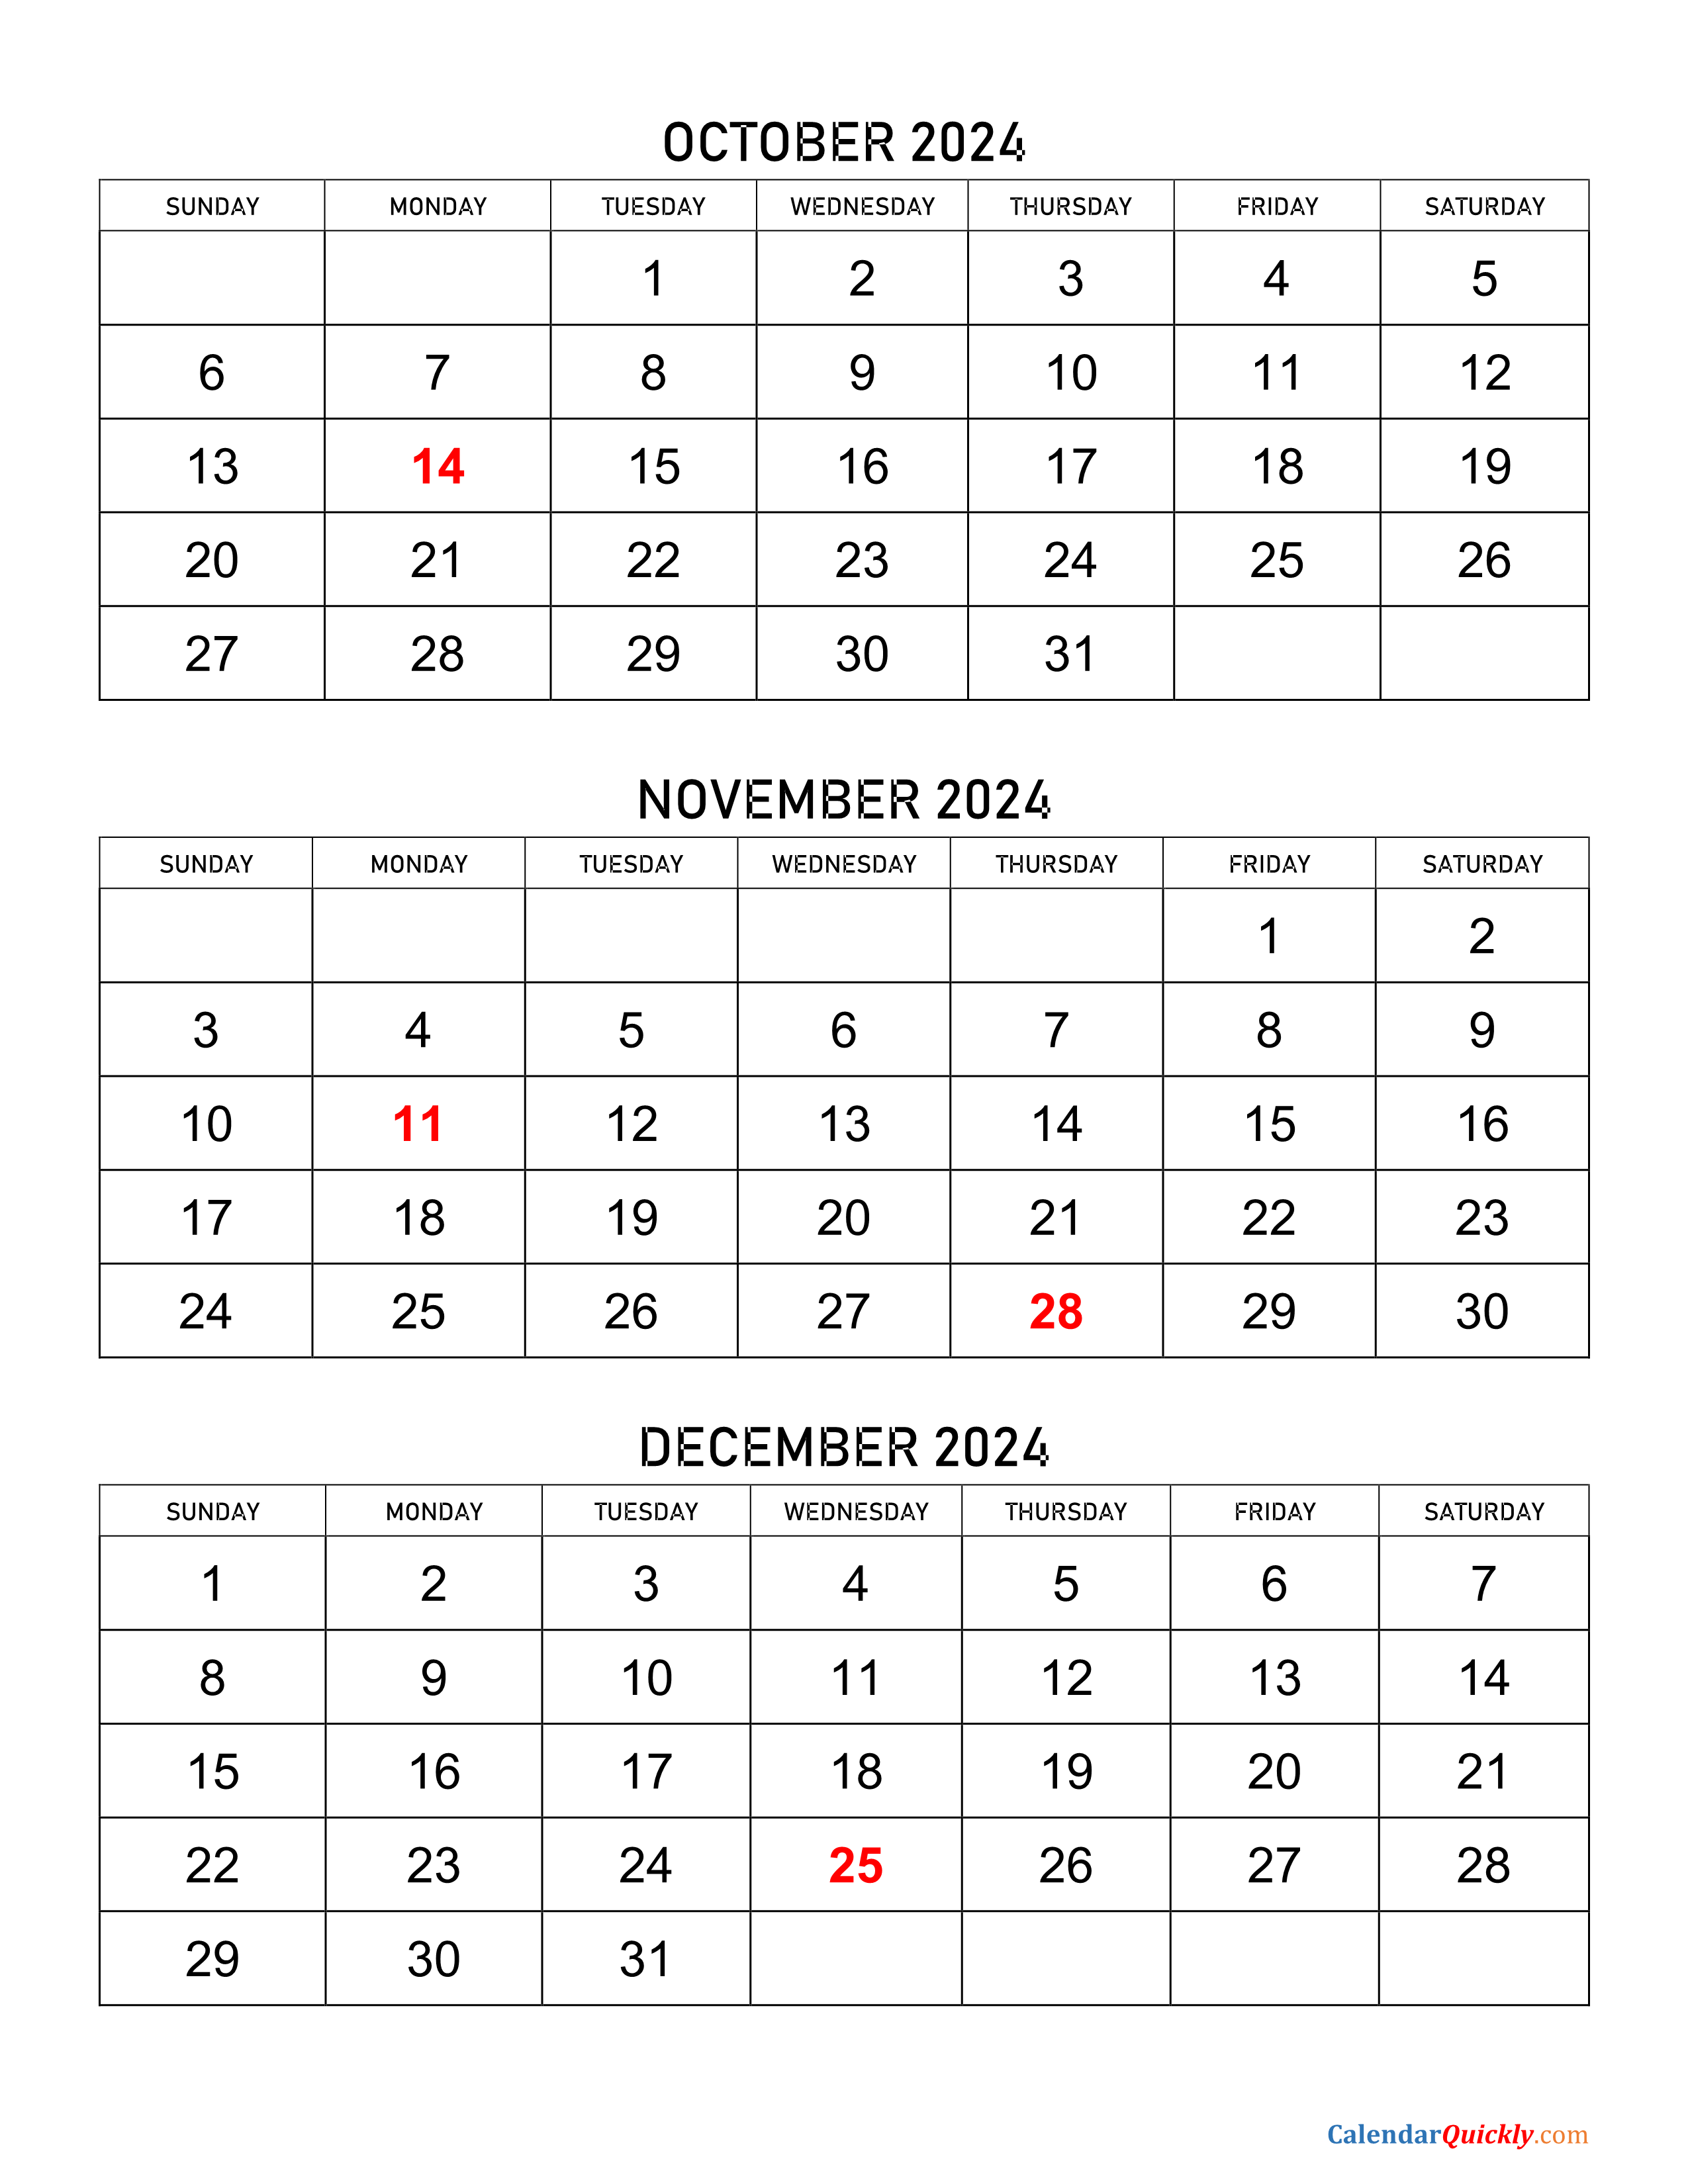 2024 October November December Calendar Printable 2024 CALENDAR PRINTABLE | Free Printable 3 Month Calendar 2024 October November December